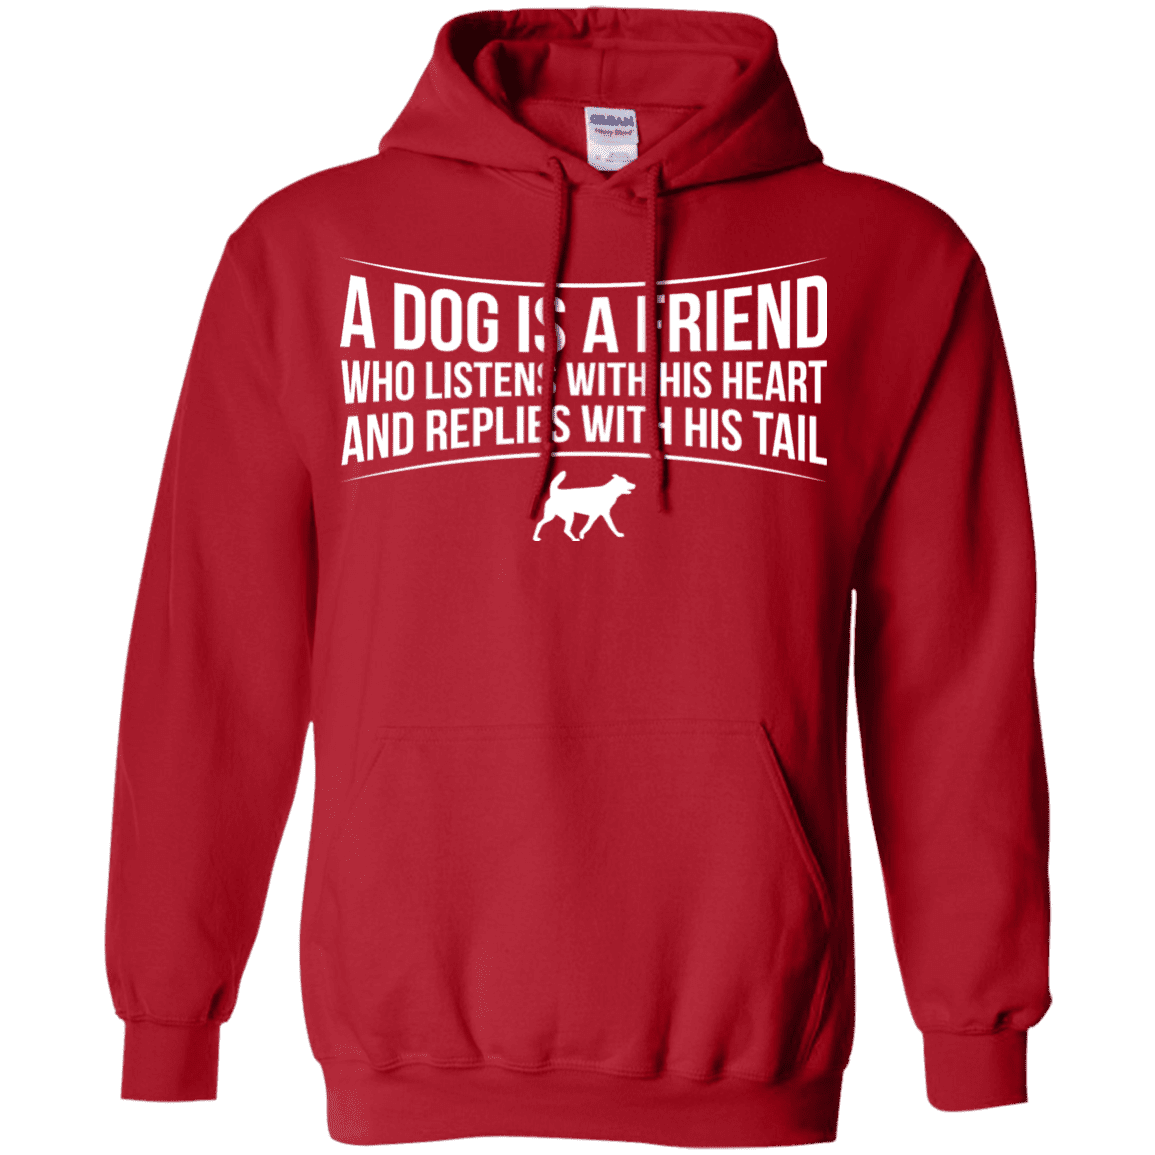 A Dog Is A Friend - Hoodie.